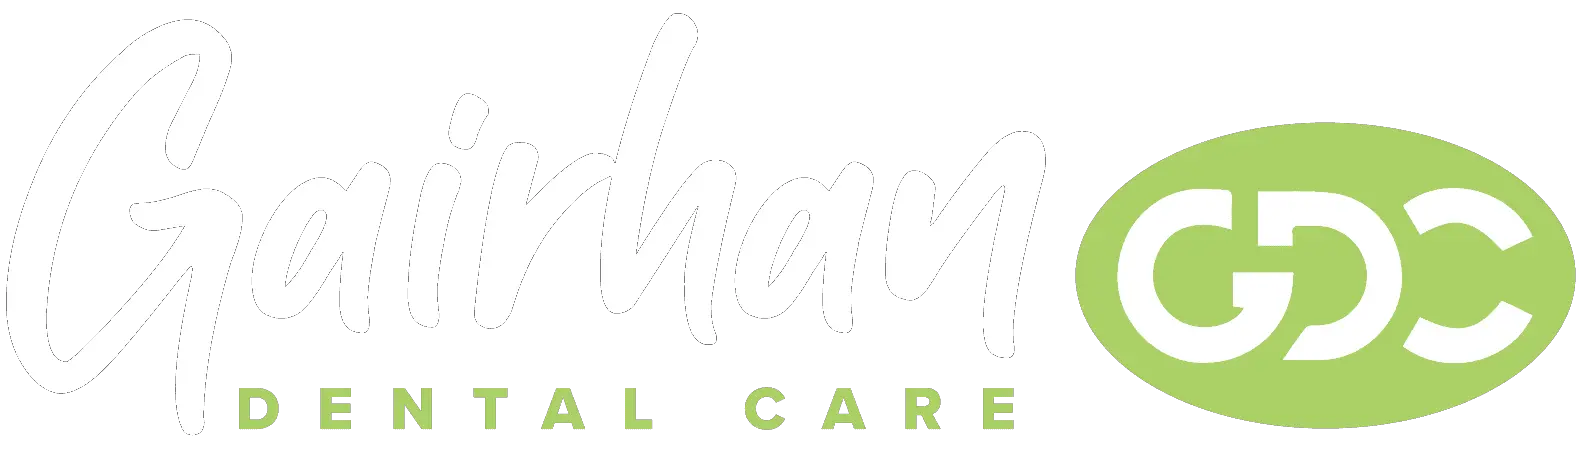 Company logo of Gairhan Dental Care